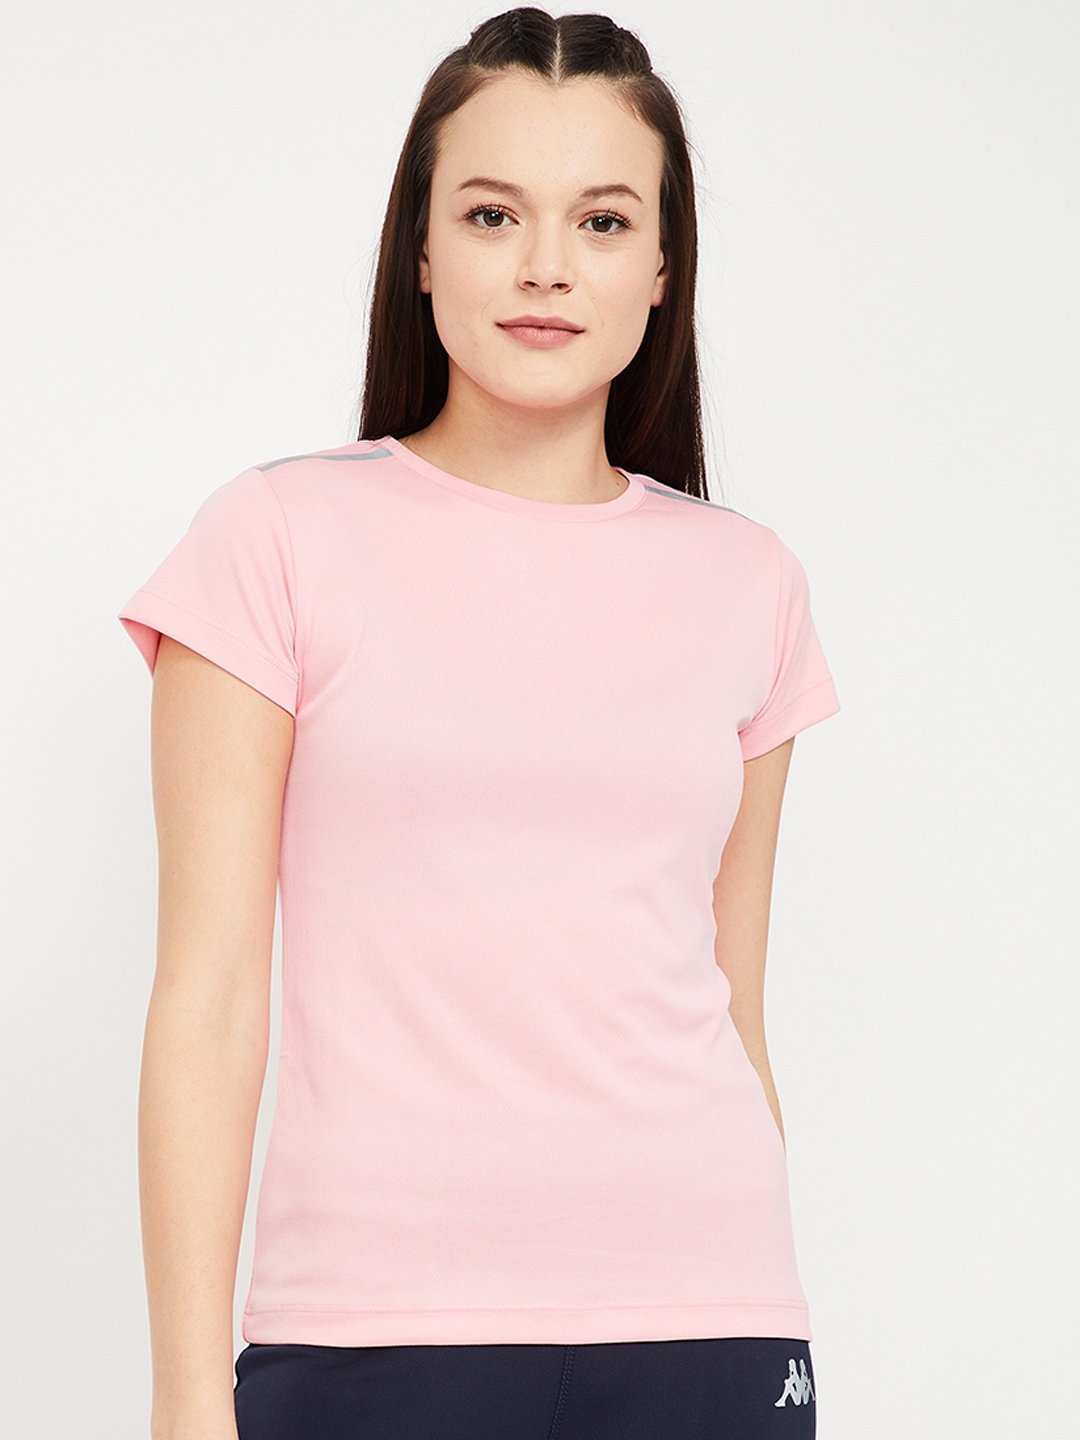 Buy Kappa Women Pink Solid Round Neck T Shirt - Tshirts for Women ...